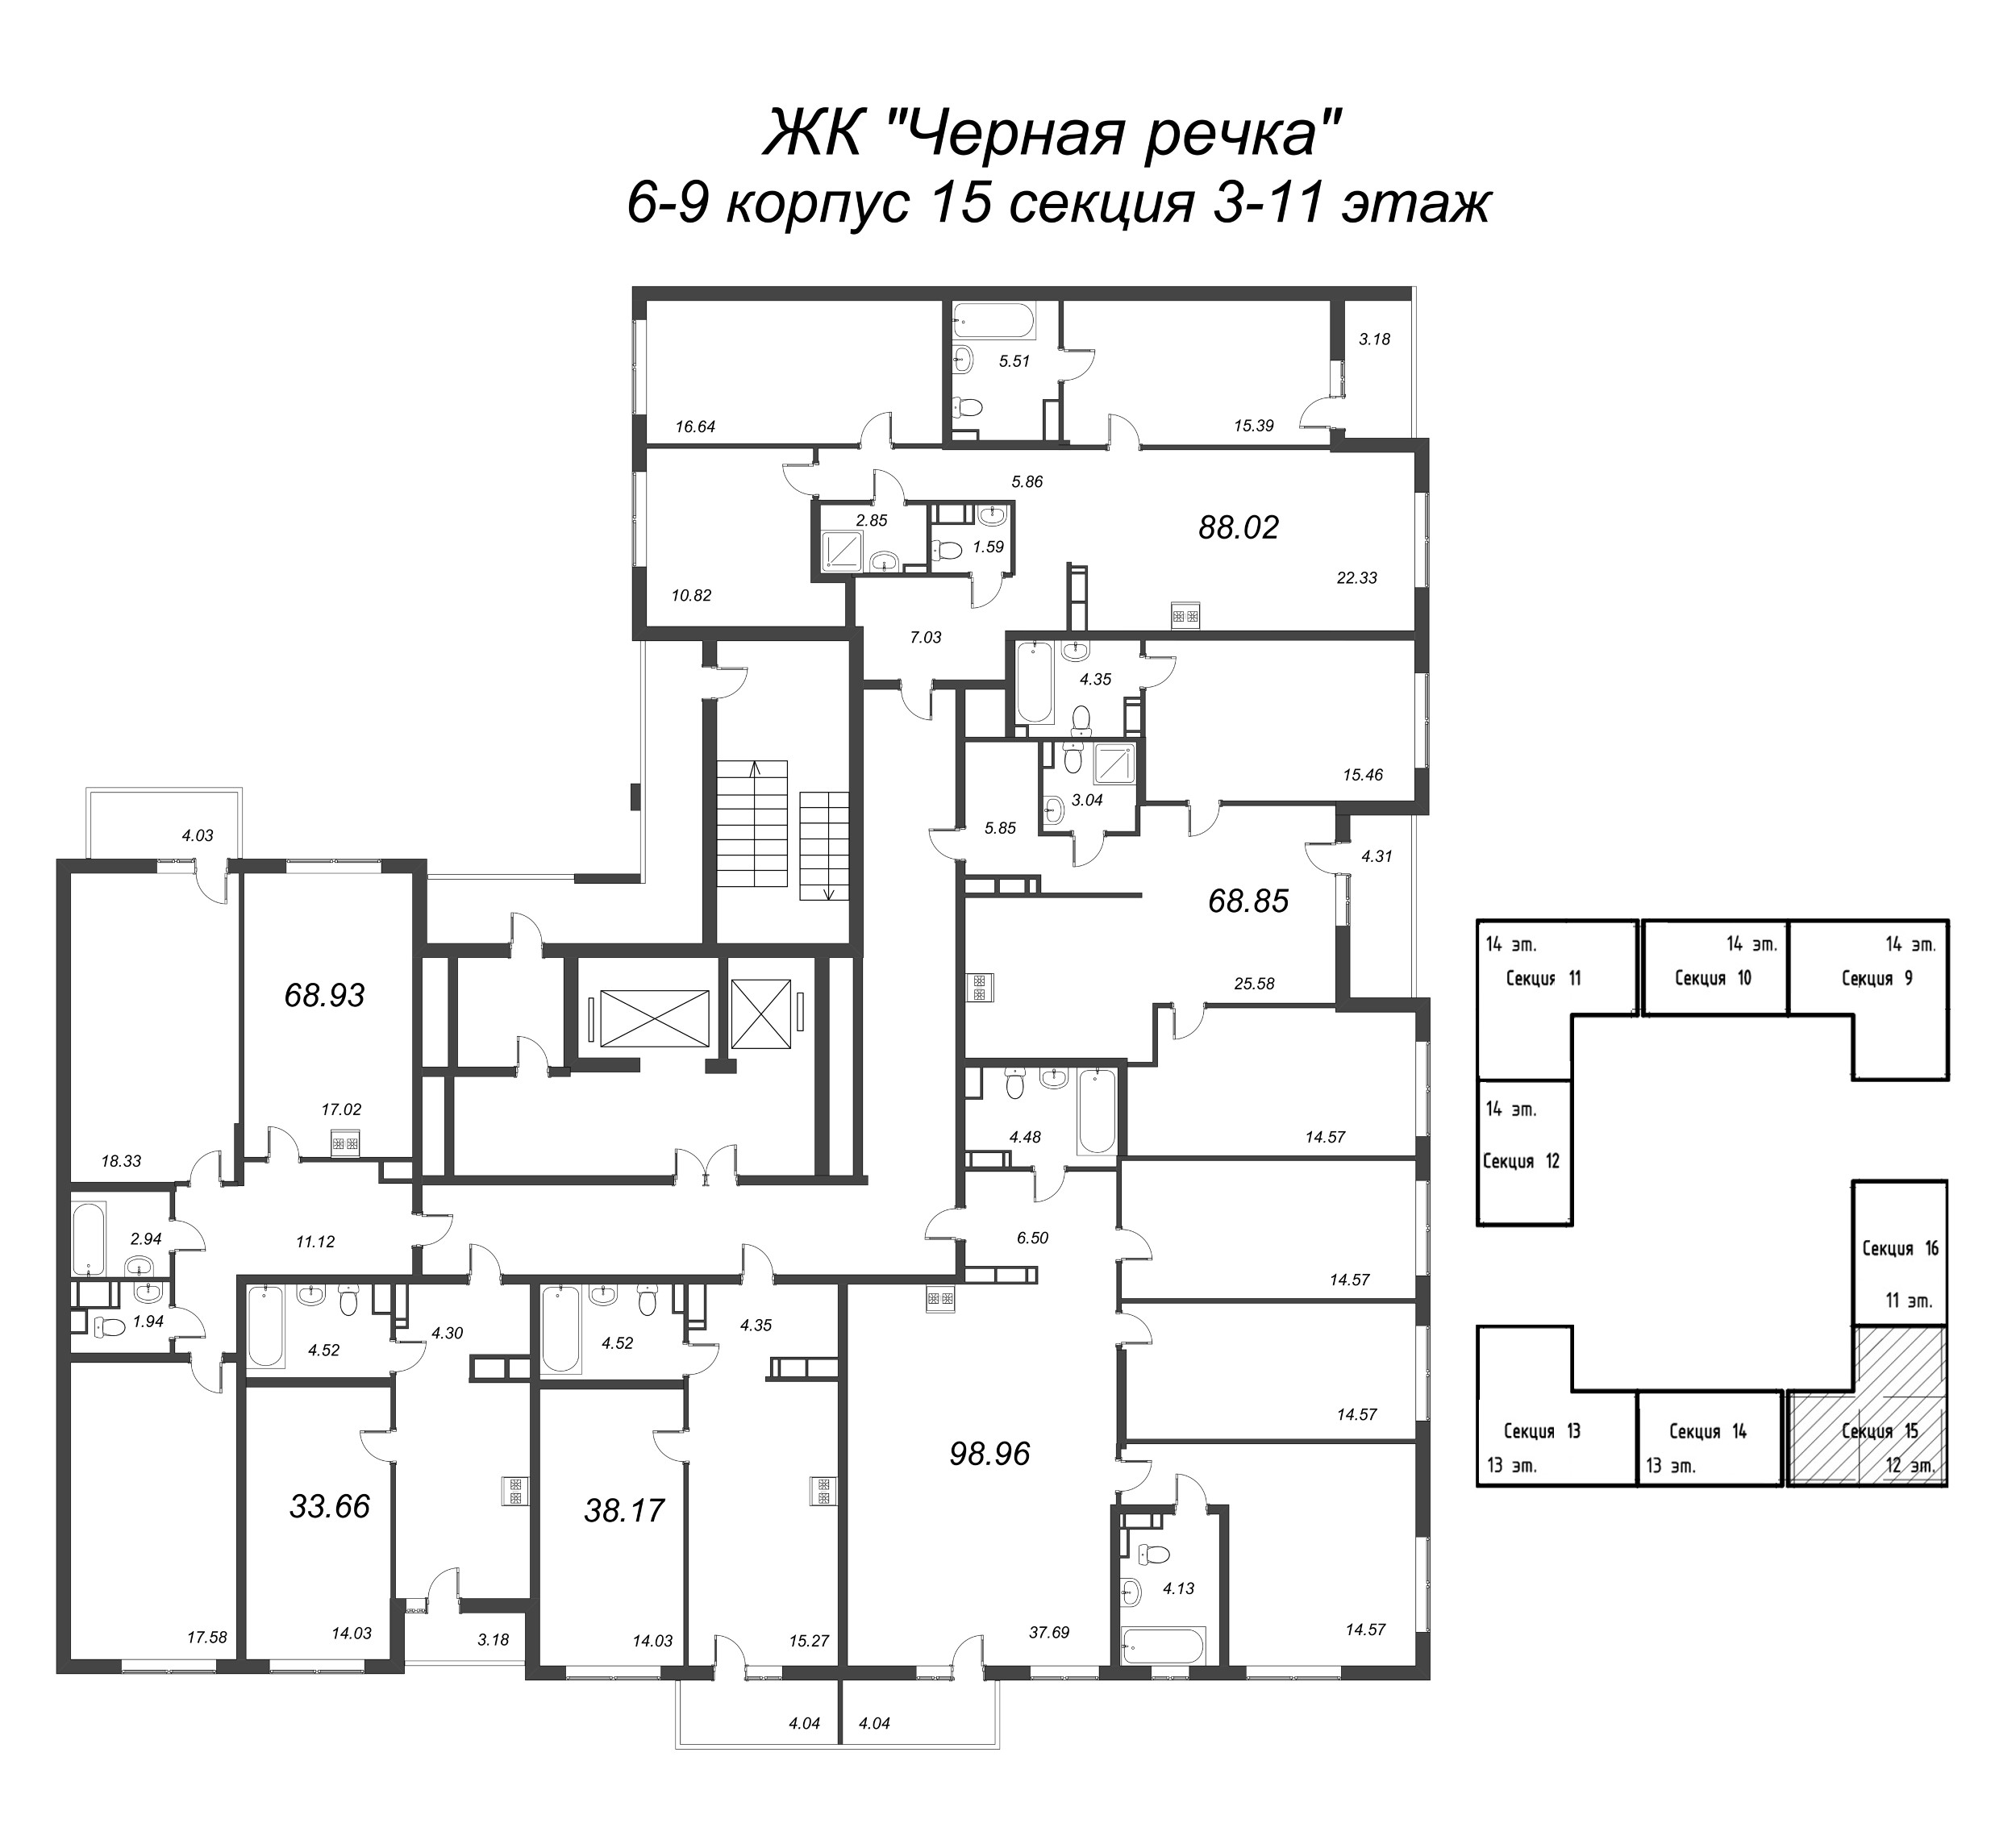 4-комнатная (Евро) квартира, 94.86 м² - планировка этажа